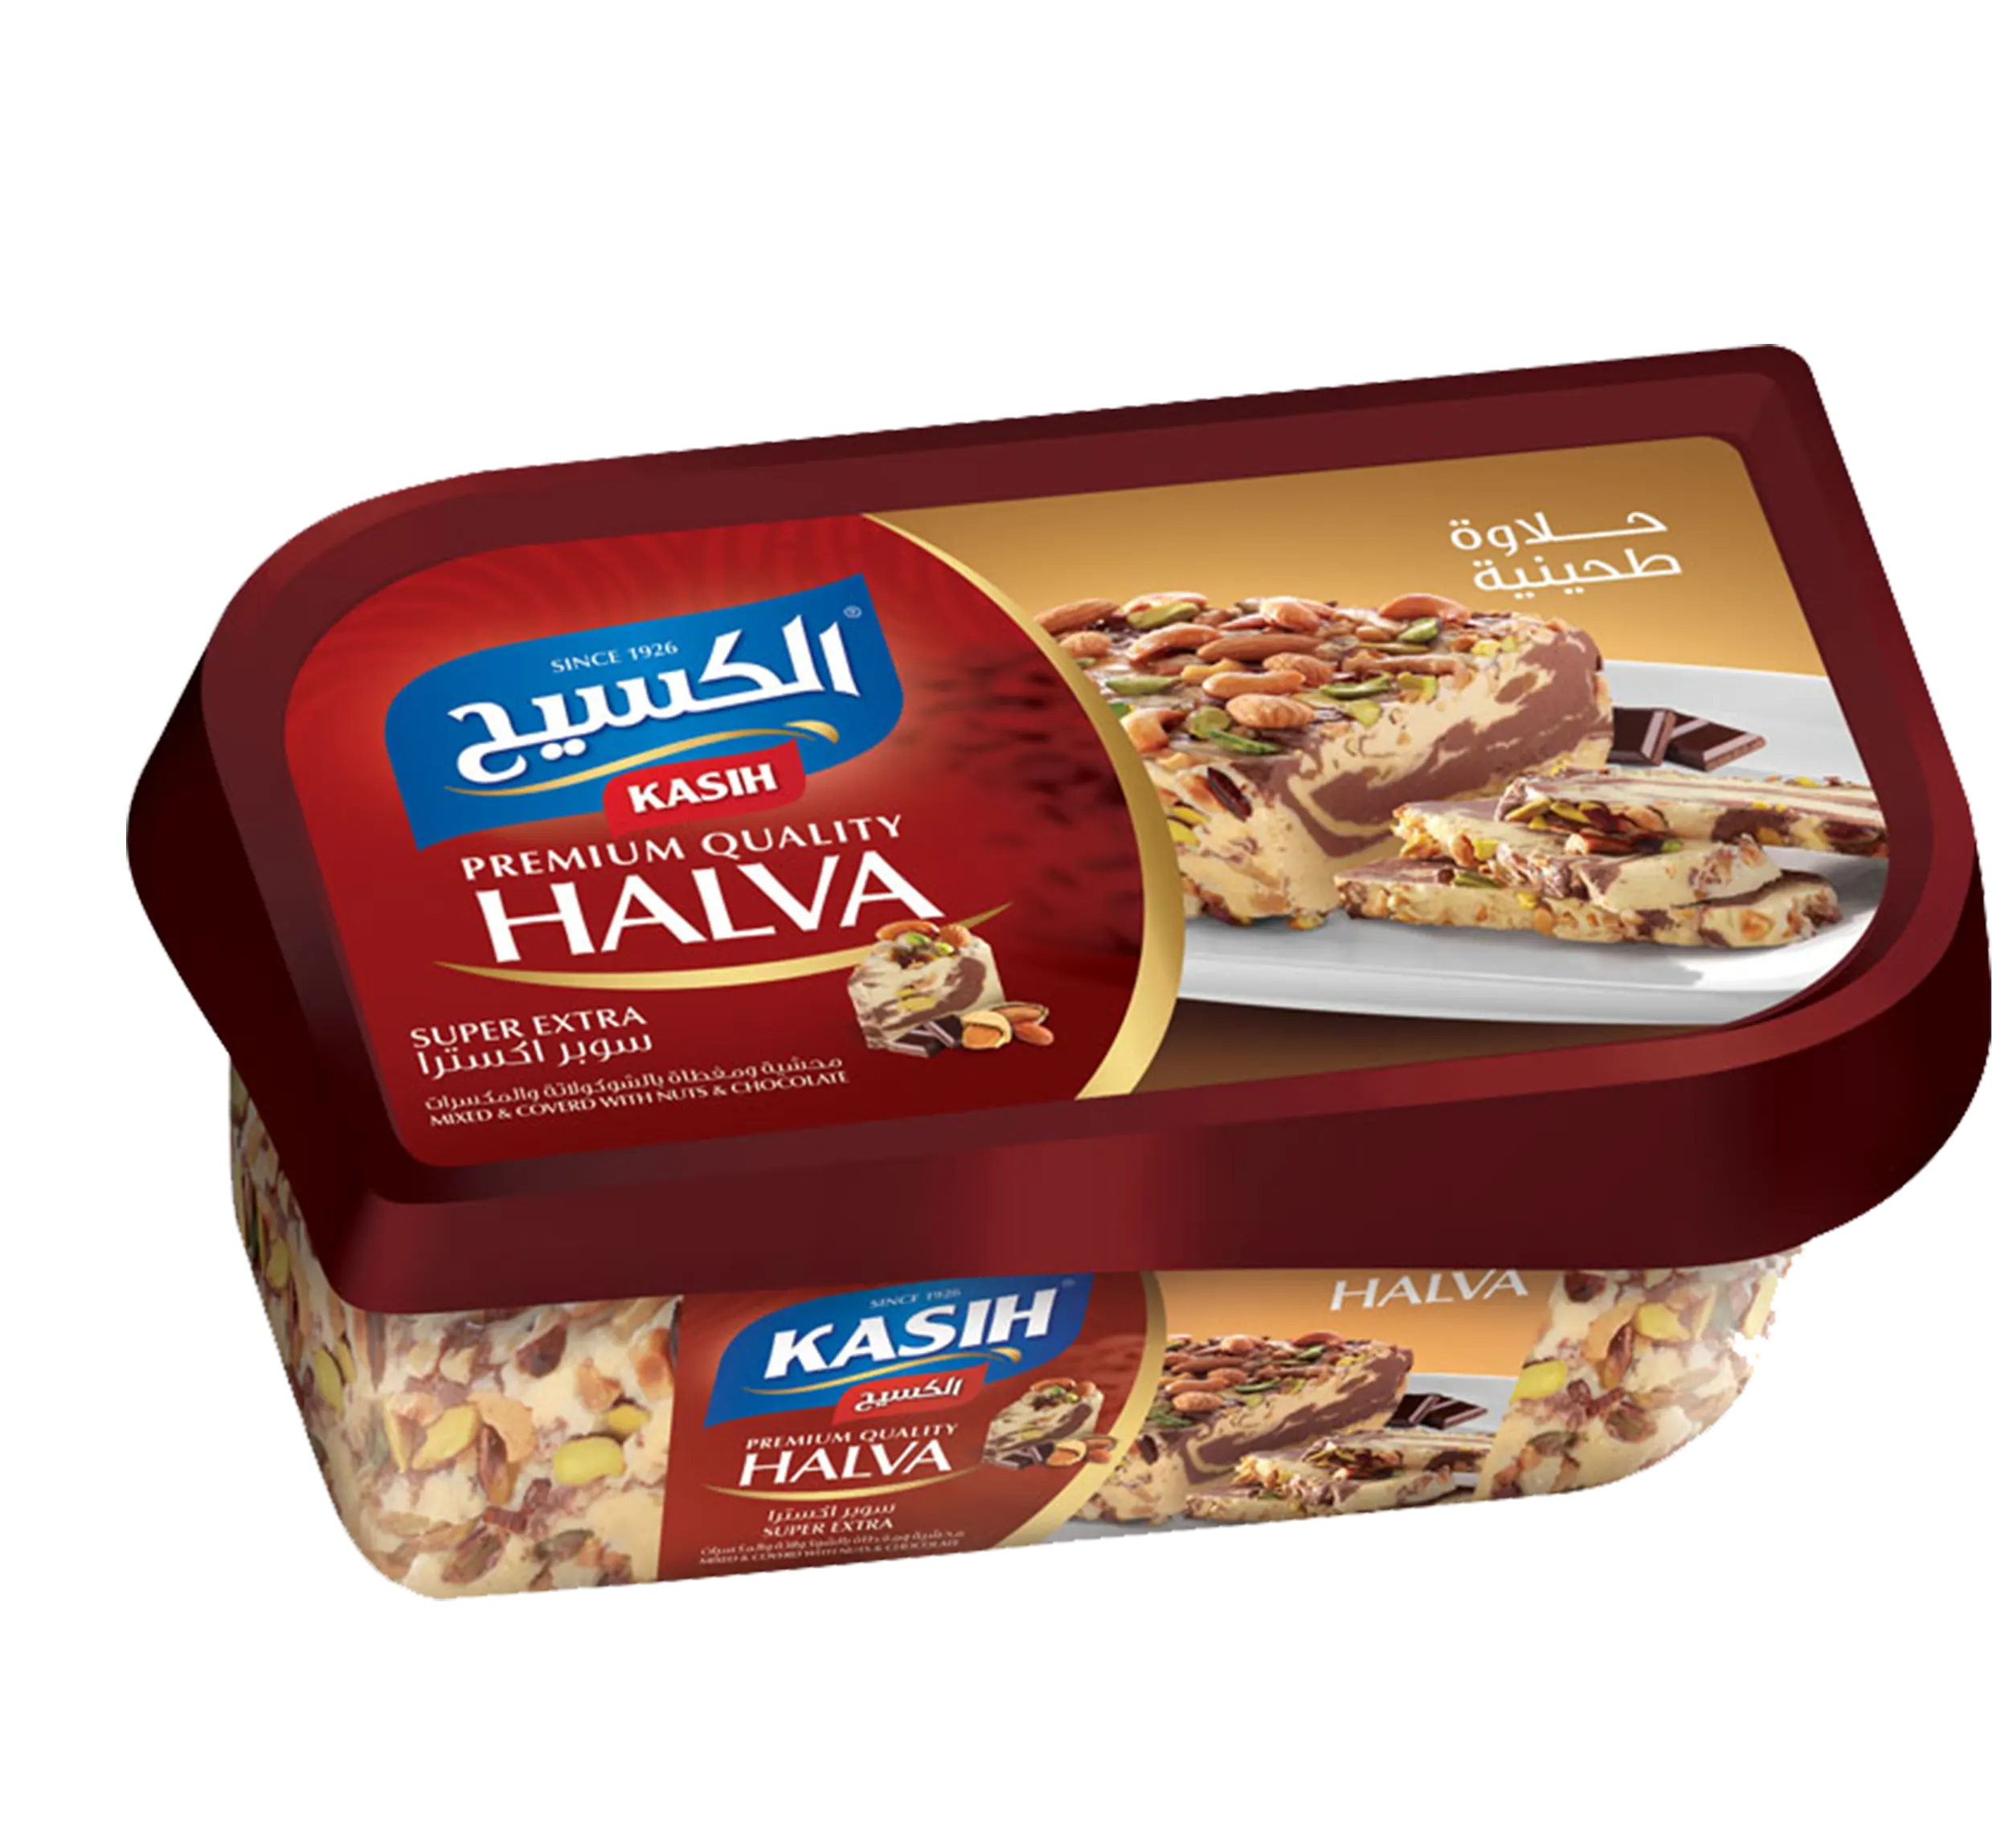 KASIH Halva Super extra with chocolate & nuts 